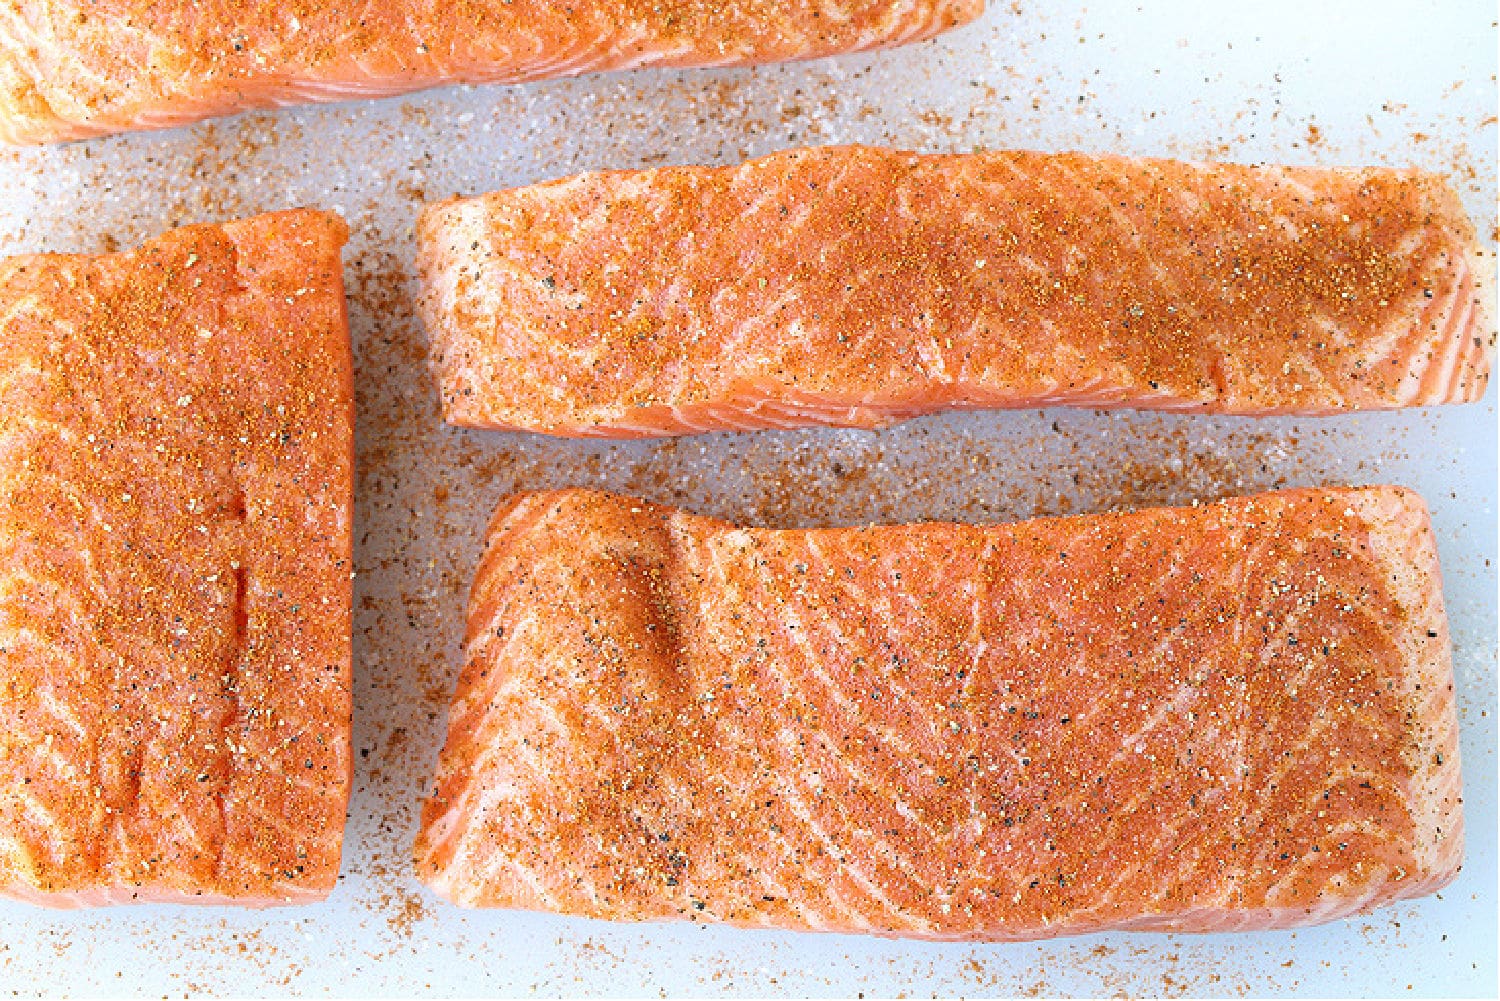 salmon filets on board with seasoning